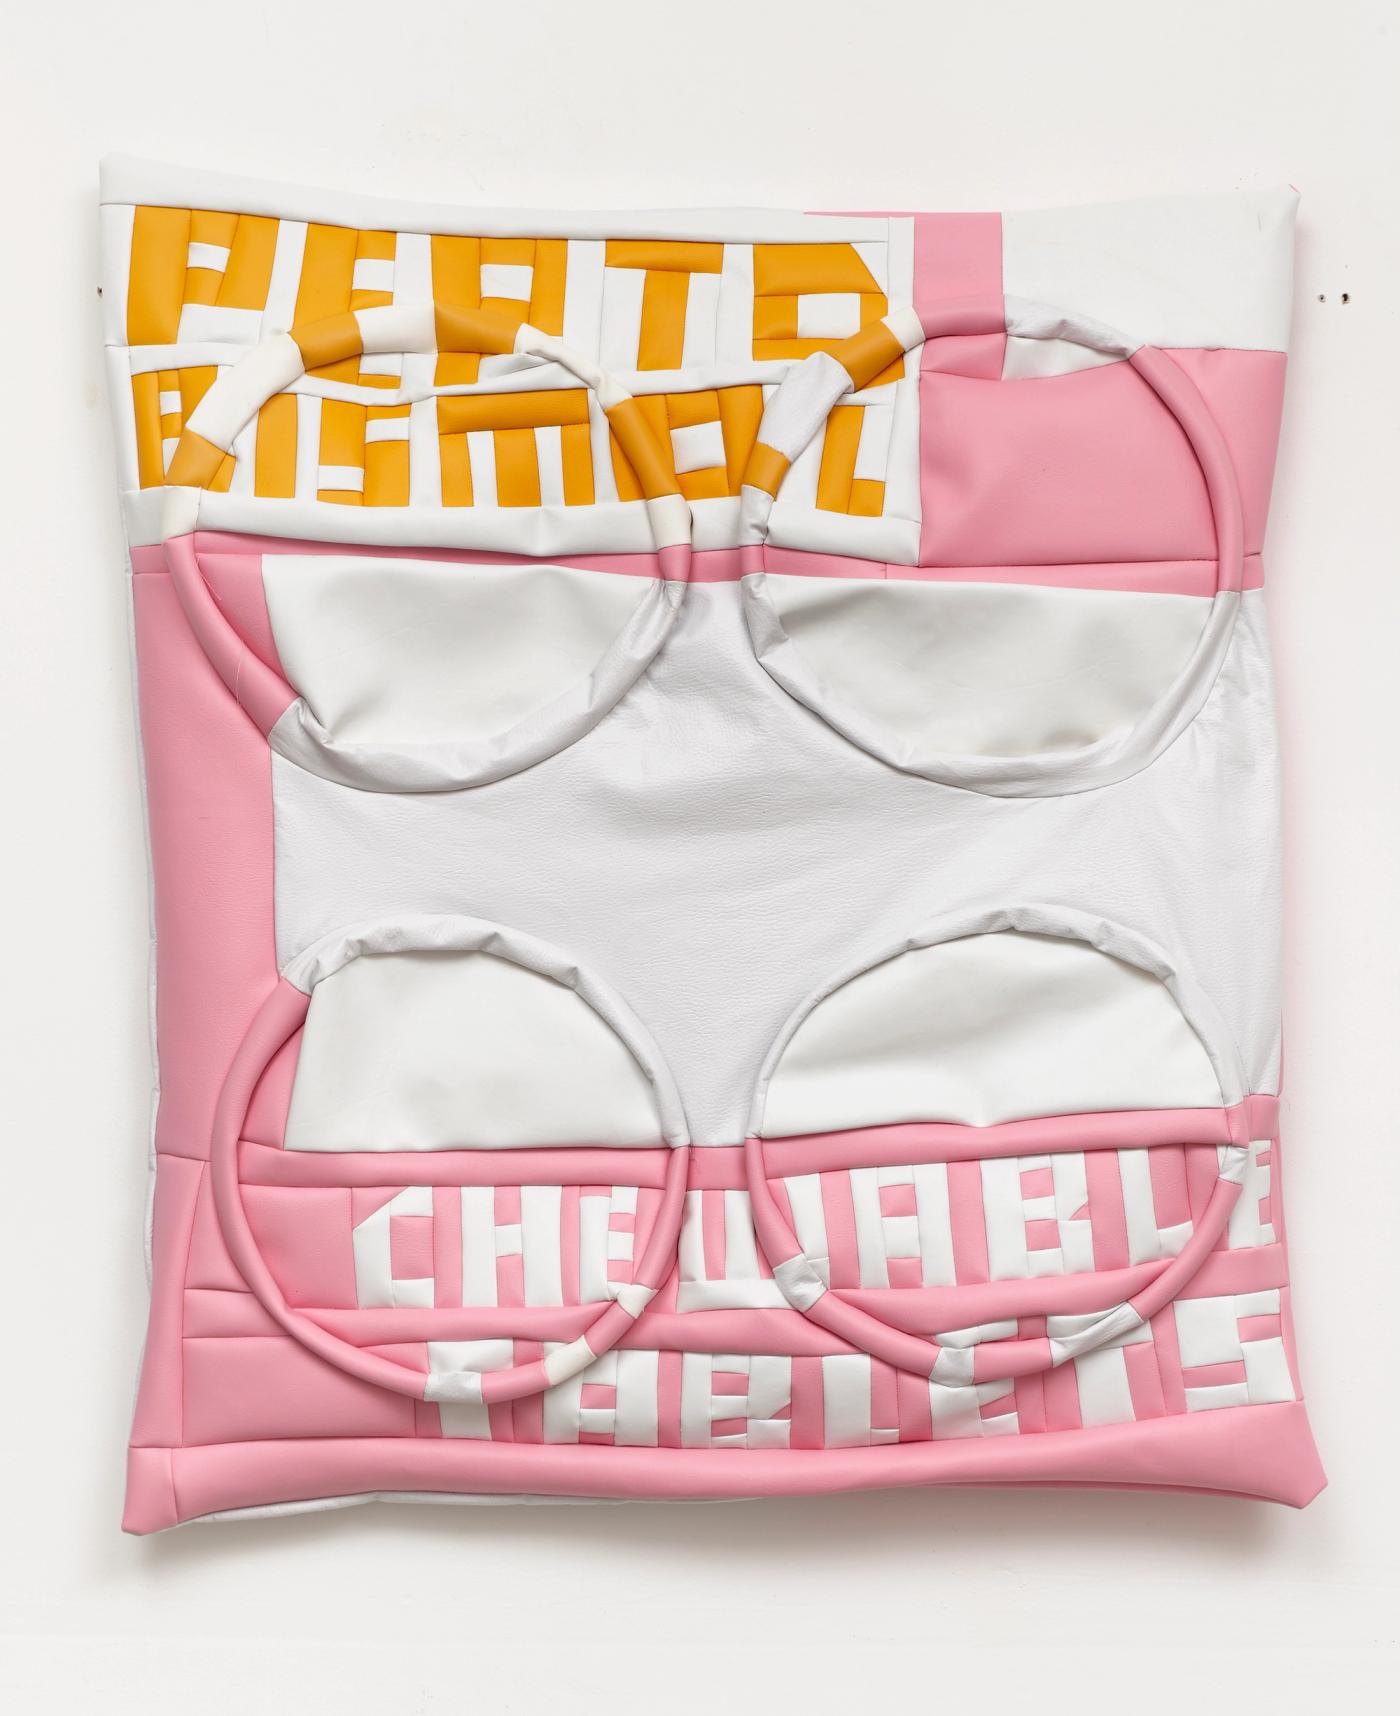 Image of Soft Pepto Bismol, 2022: Vinyl and polyfil